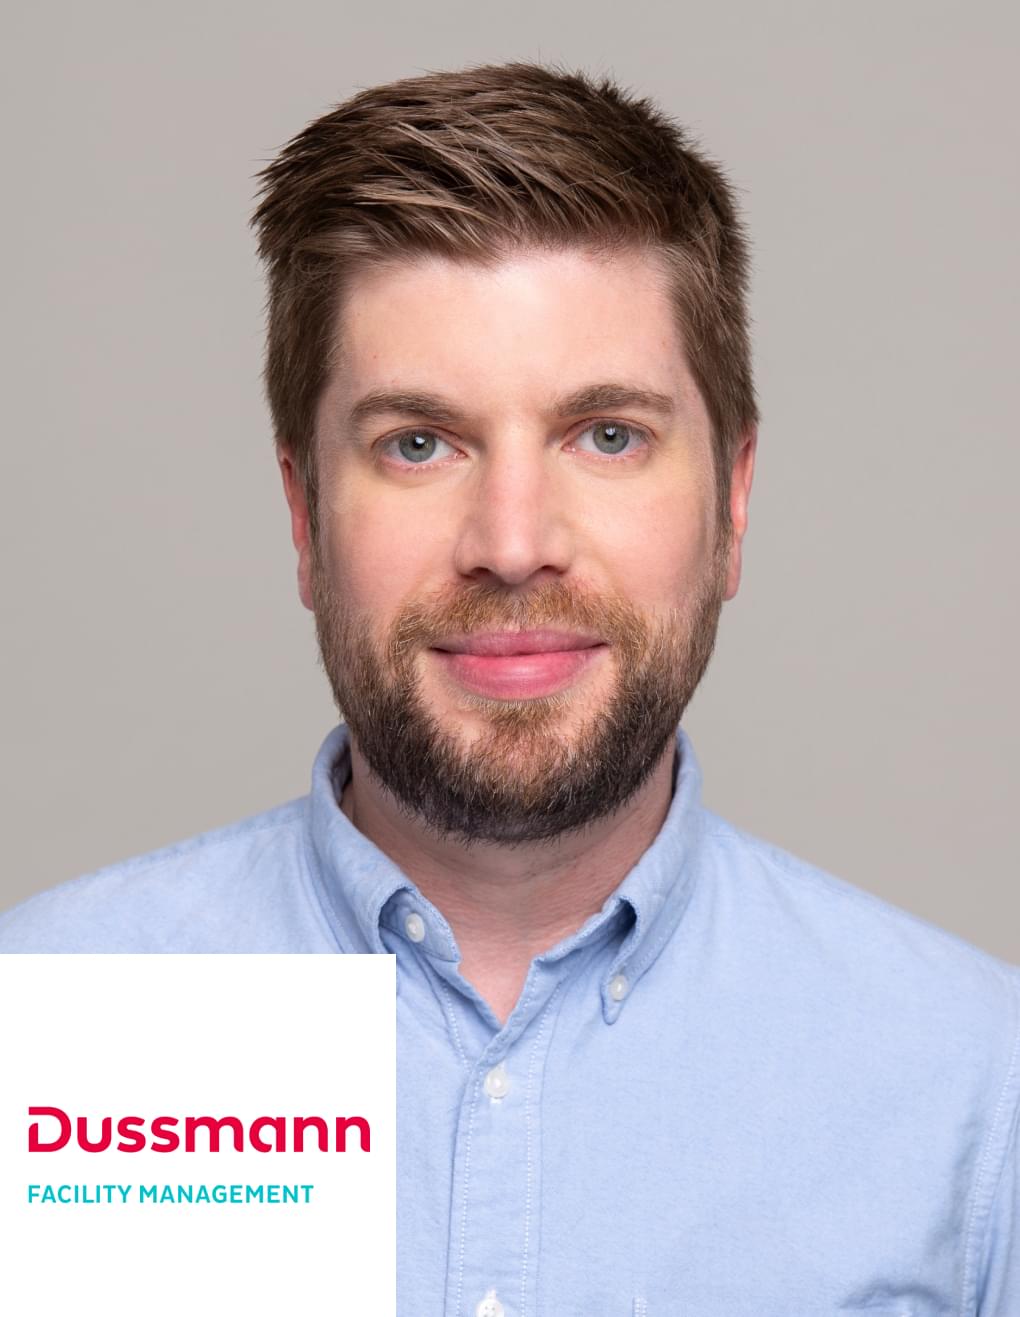 Thomas Müller, Security Technician at Dussmann Facility Management